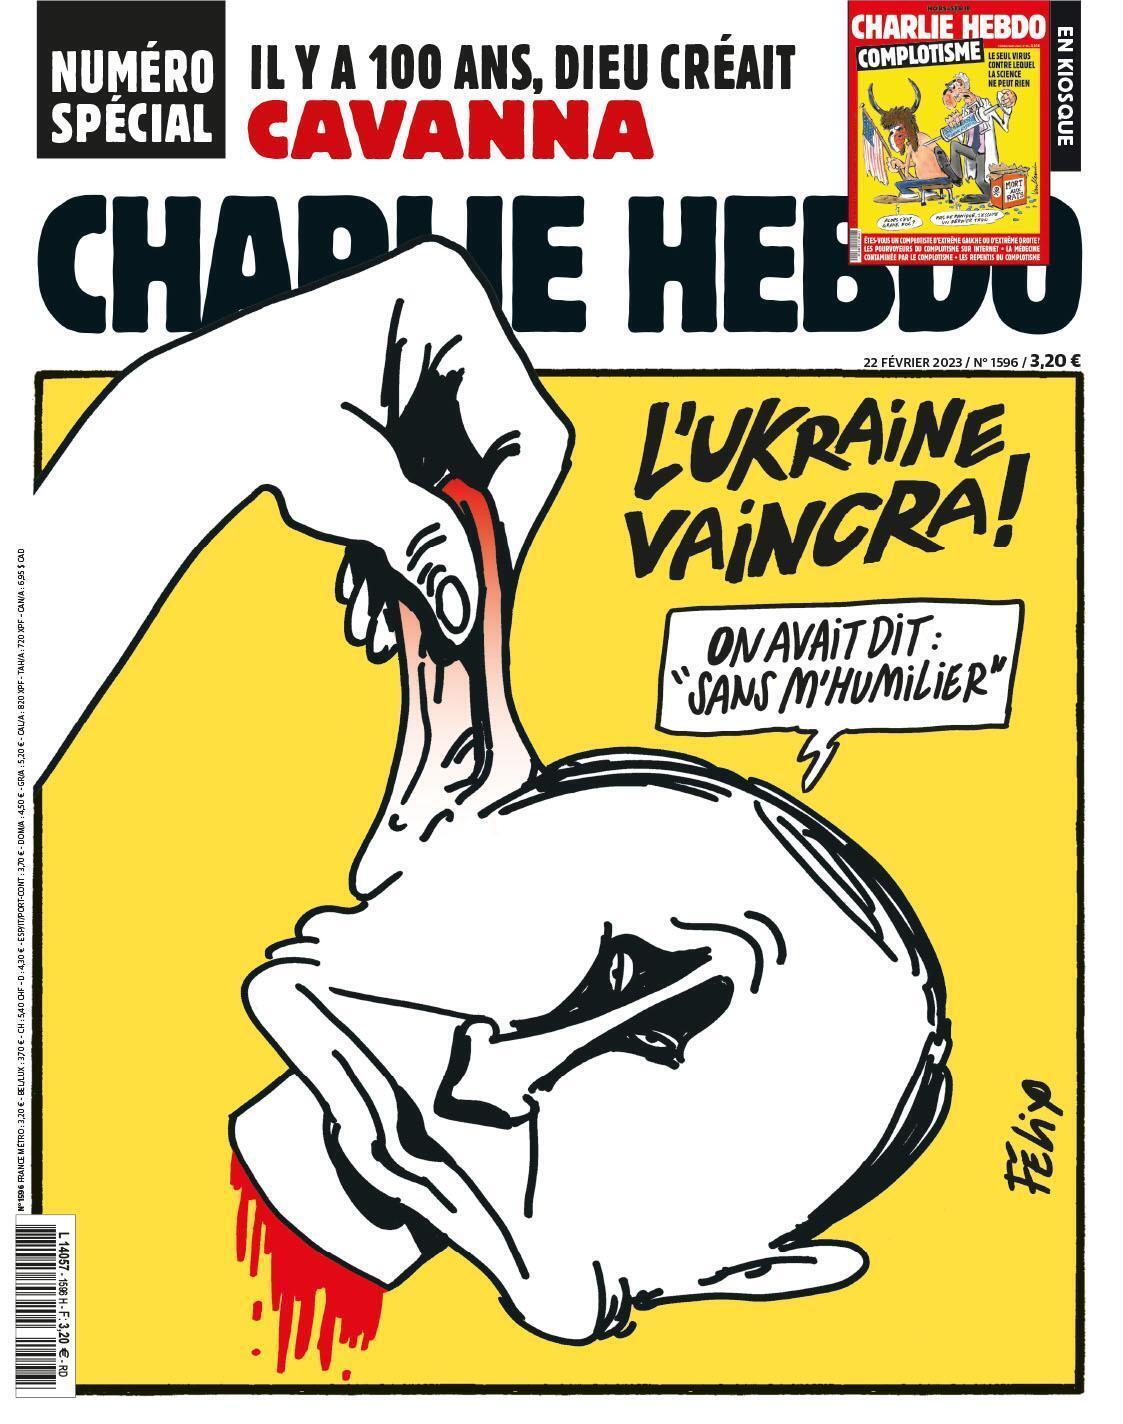 "Украина победит!": Charlie Hebdo разместил жесткую карикатуру на Путина на обложке